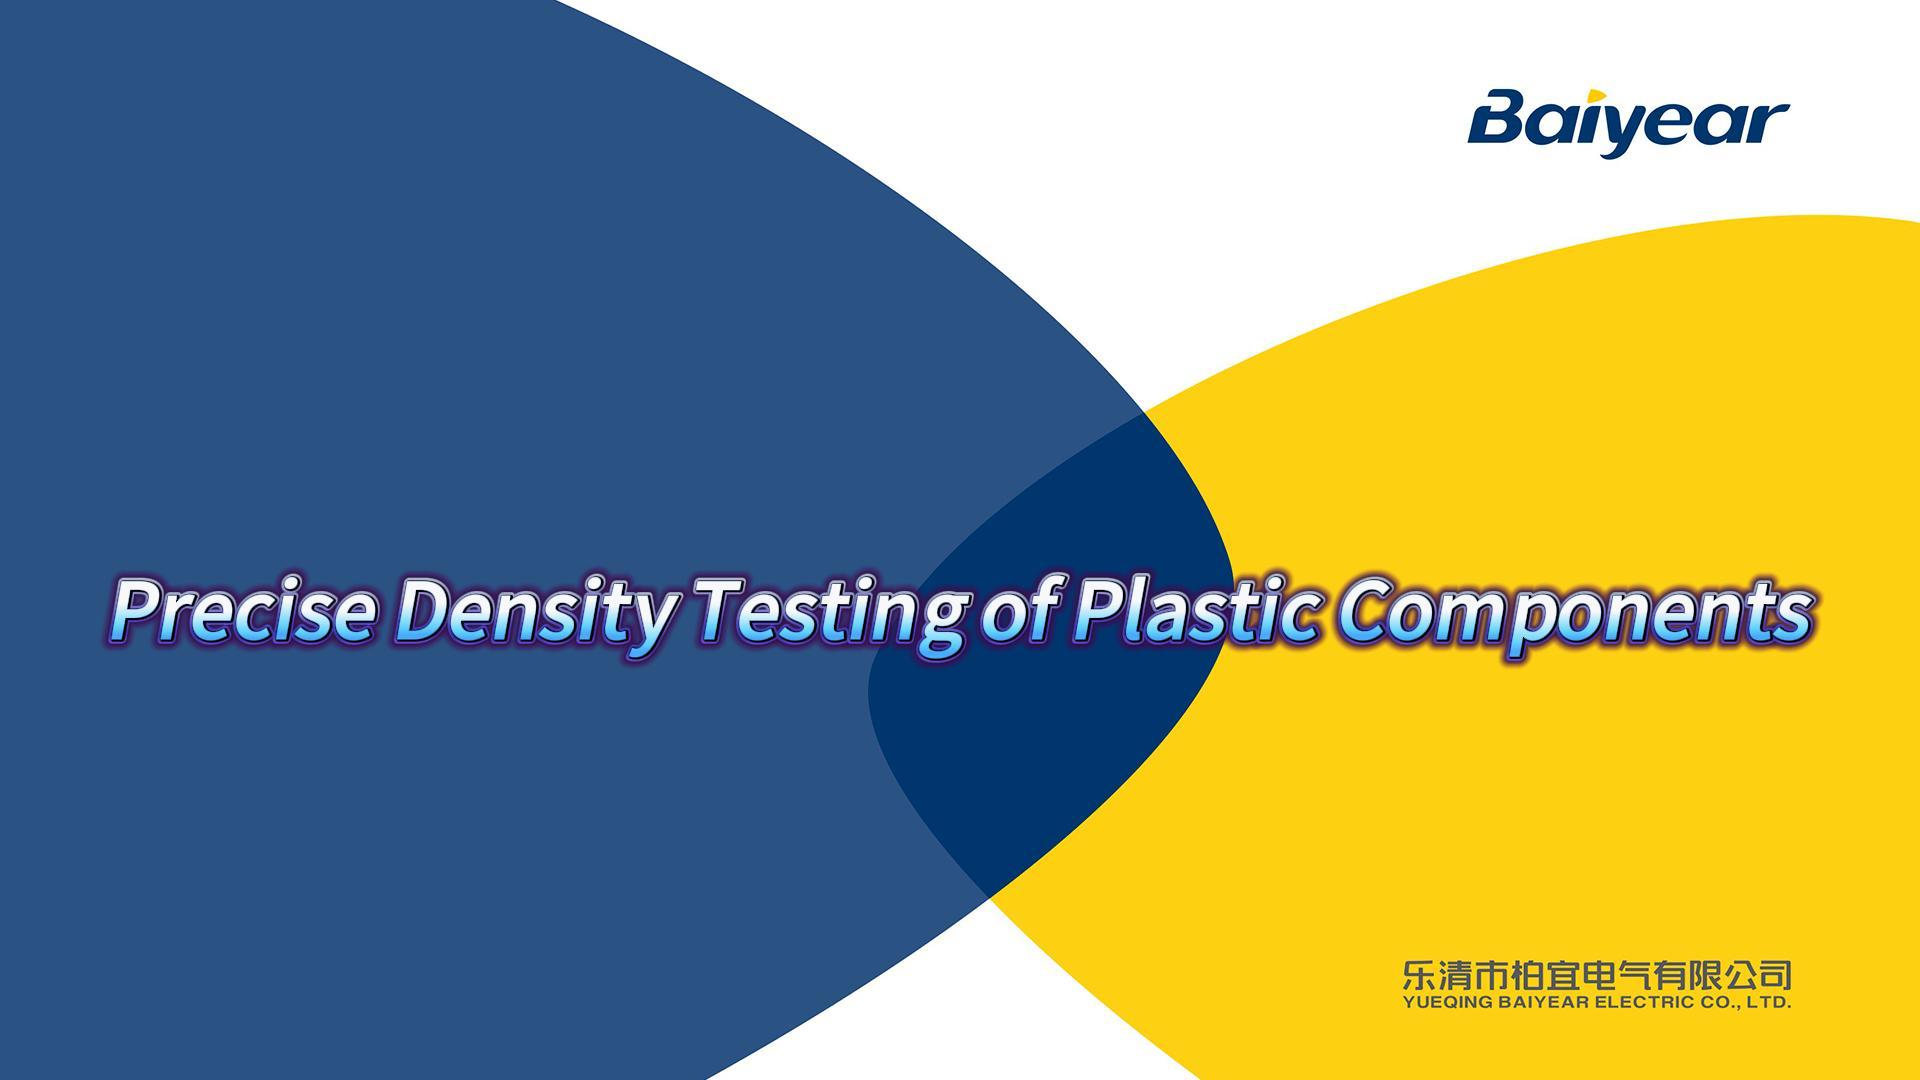 Fully Automated Electronic Density Analyzer ကို အသုံးပြု၍ ပလပ်စတစ် အစိတ်အပိုင်းများ၏ သိပ်သည်းဆကို စမ်းသပ်ခြင်း။